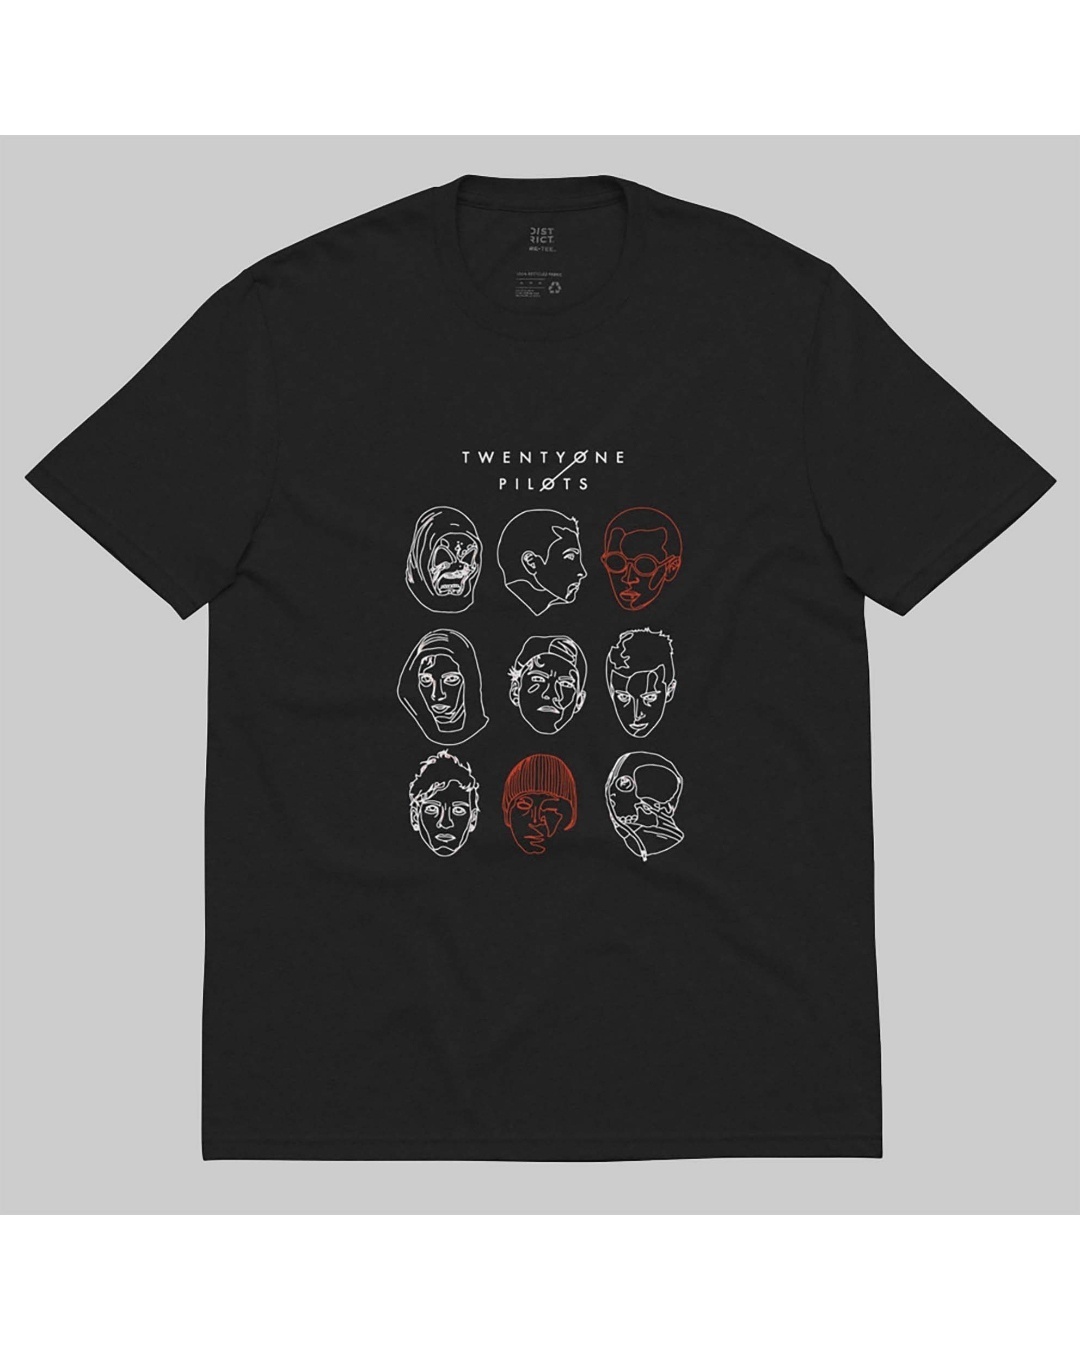 Shop Men's Black Twenty One Pilots Graphic Printed T-shirt